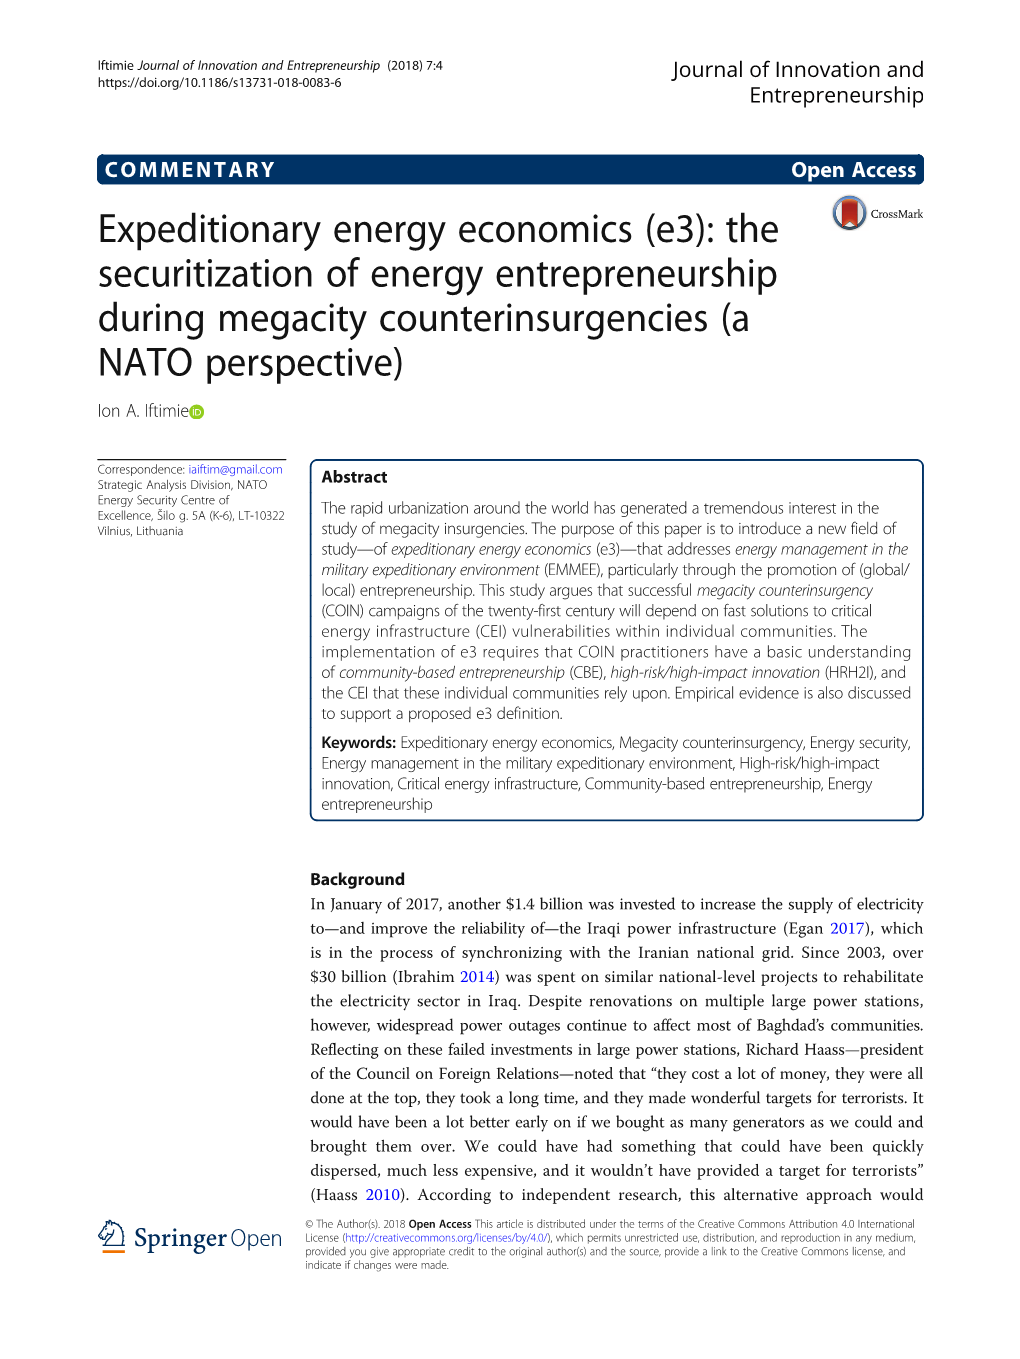 Expeditionary Energy Economics (E3): the Securitization of Energy Entrepreneurship During Megacity Counterinsurgencies (A NATO Perspective) Ion A